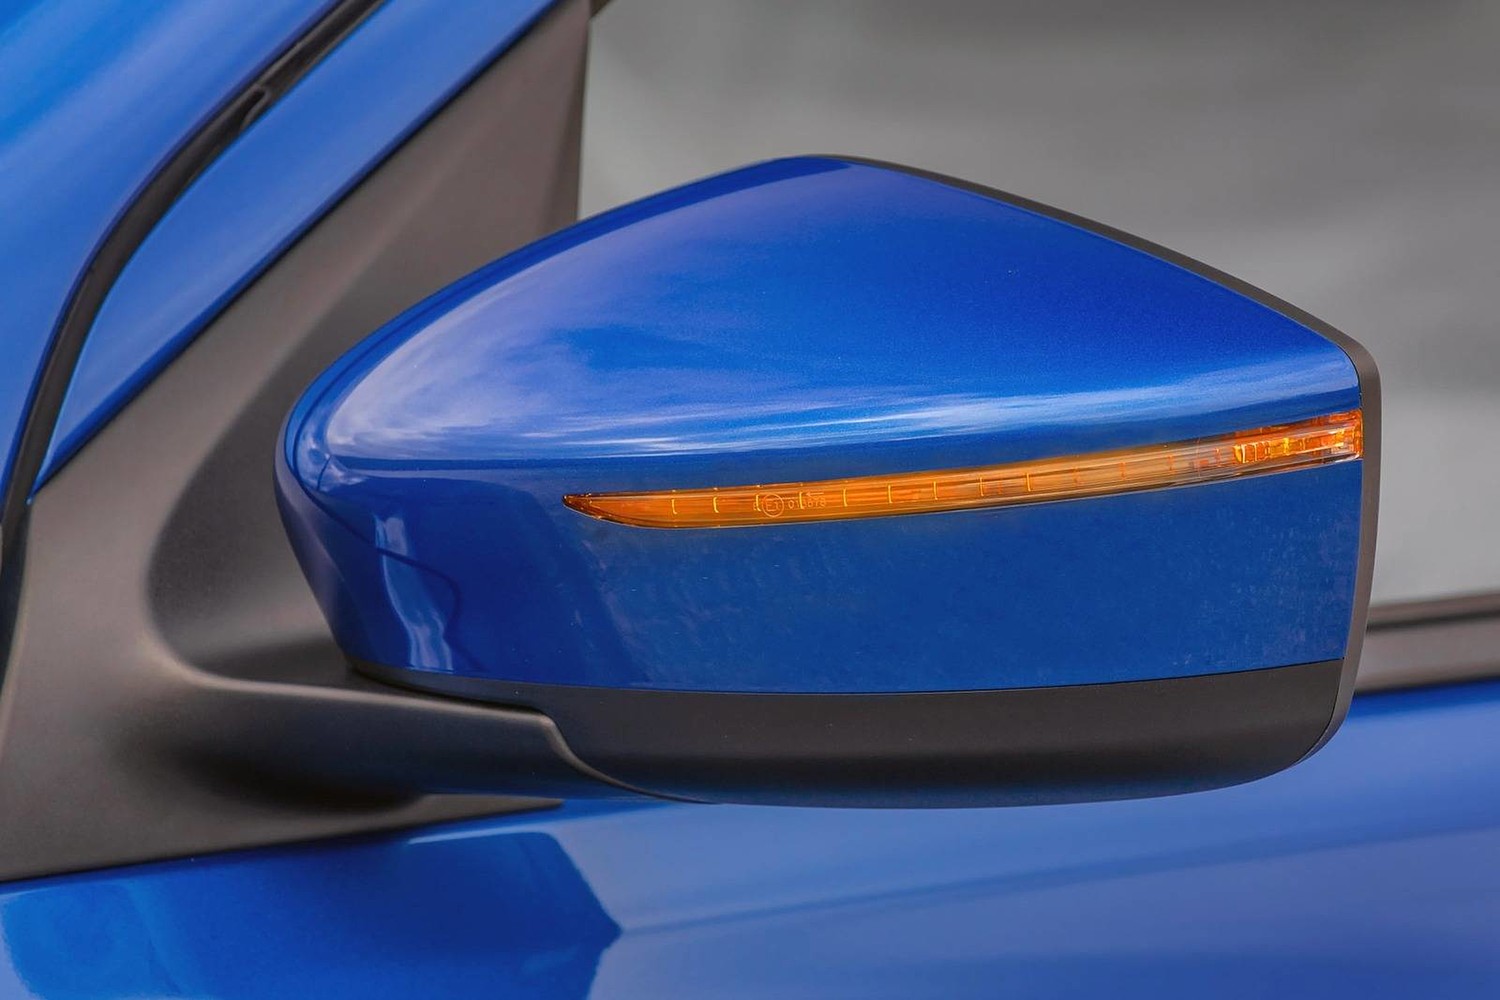 Nissan Versa 1.6 SL Sedan Exterior Mirror Detail (2015 model year shown)